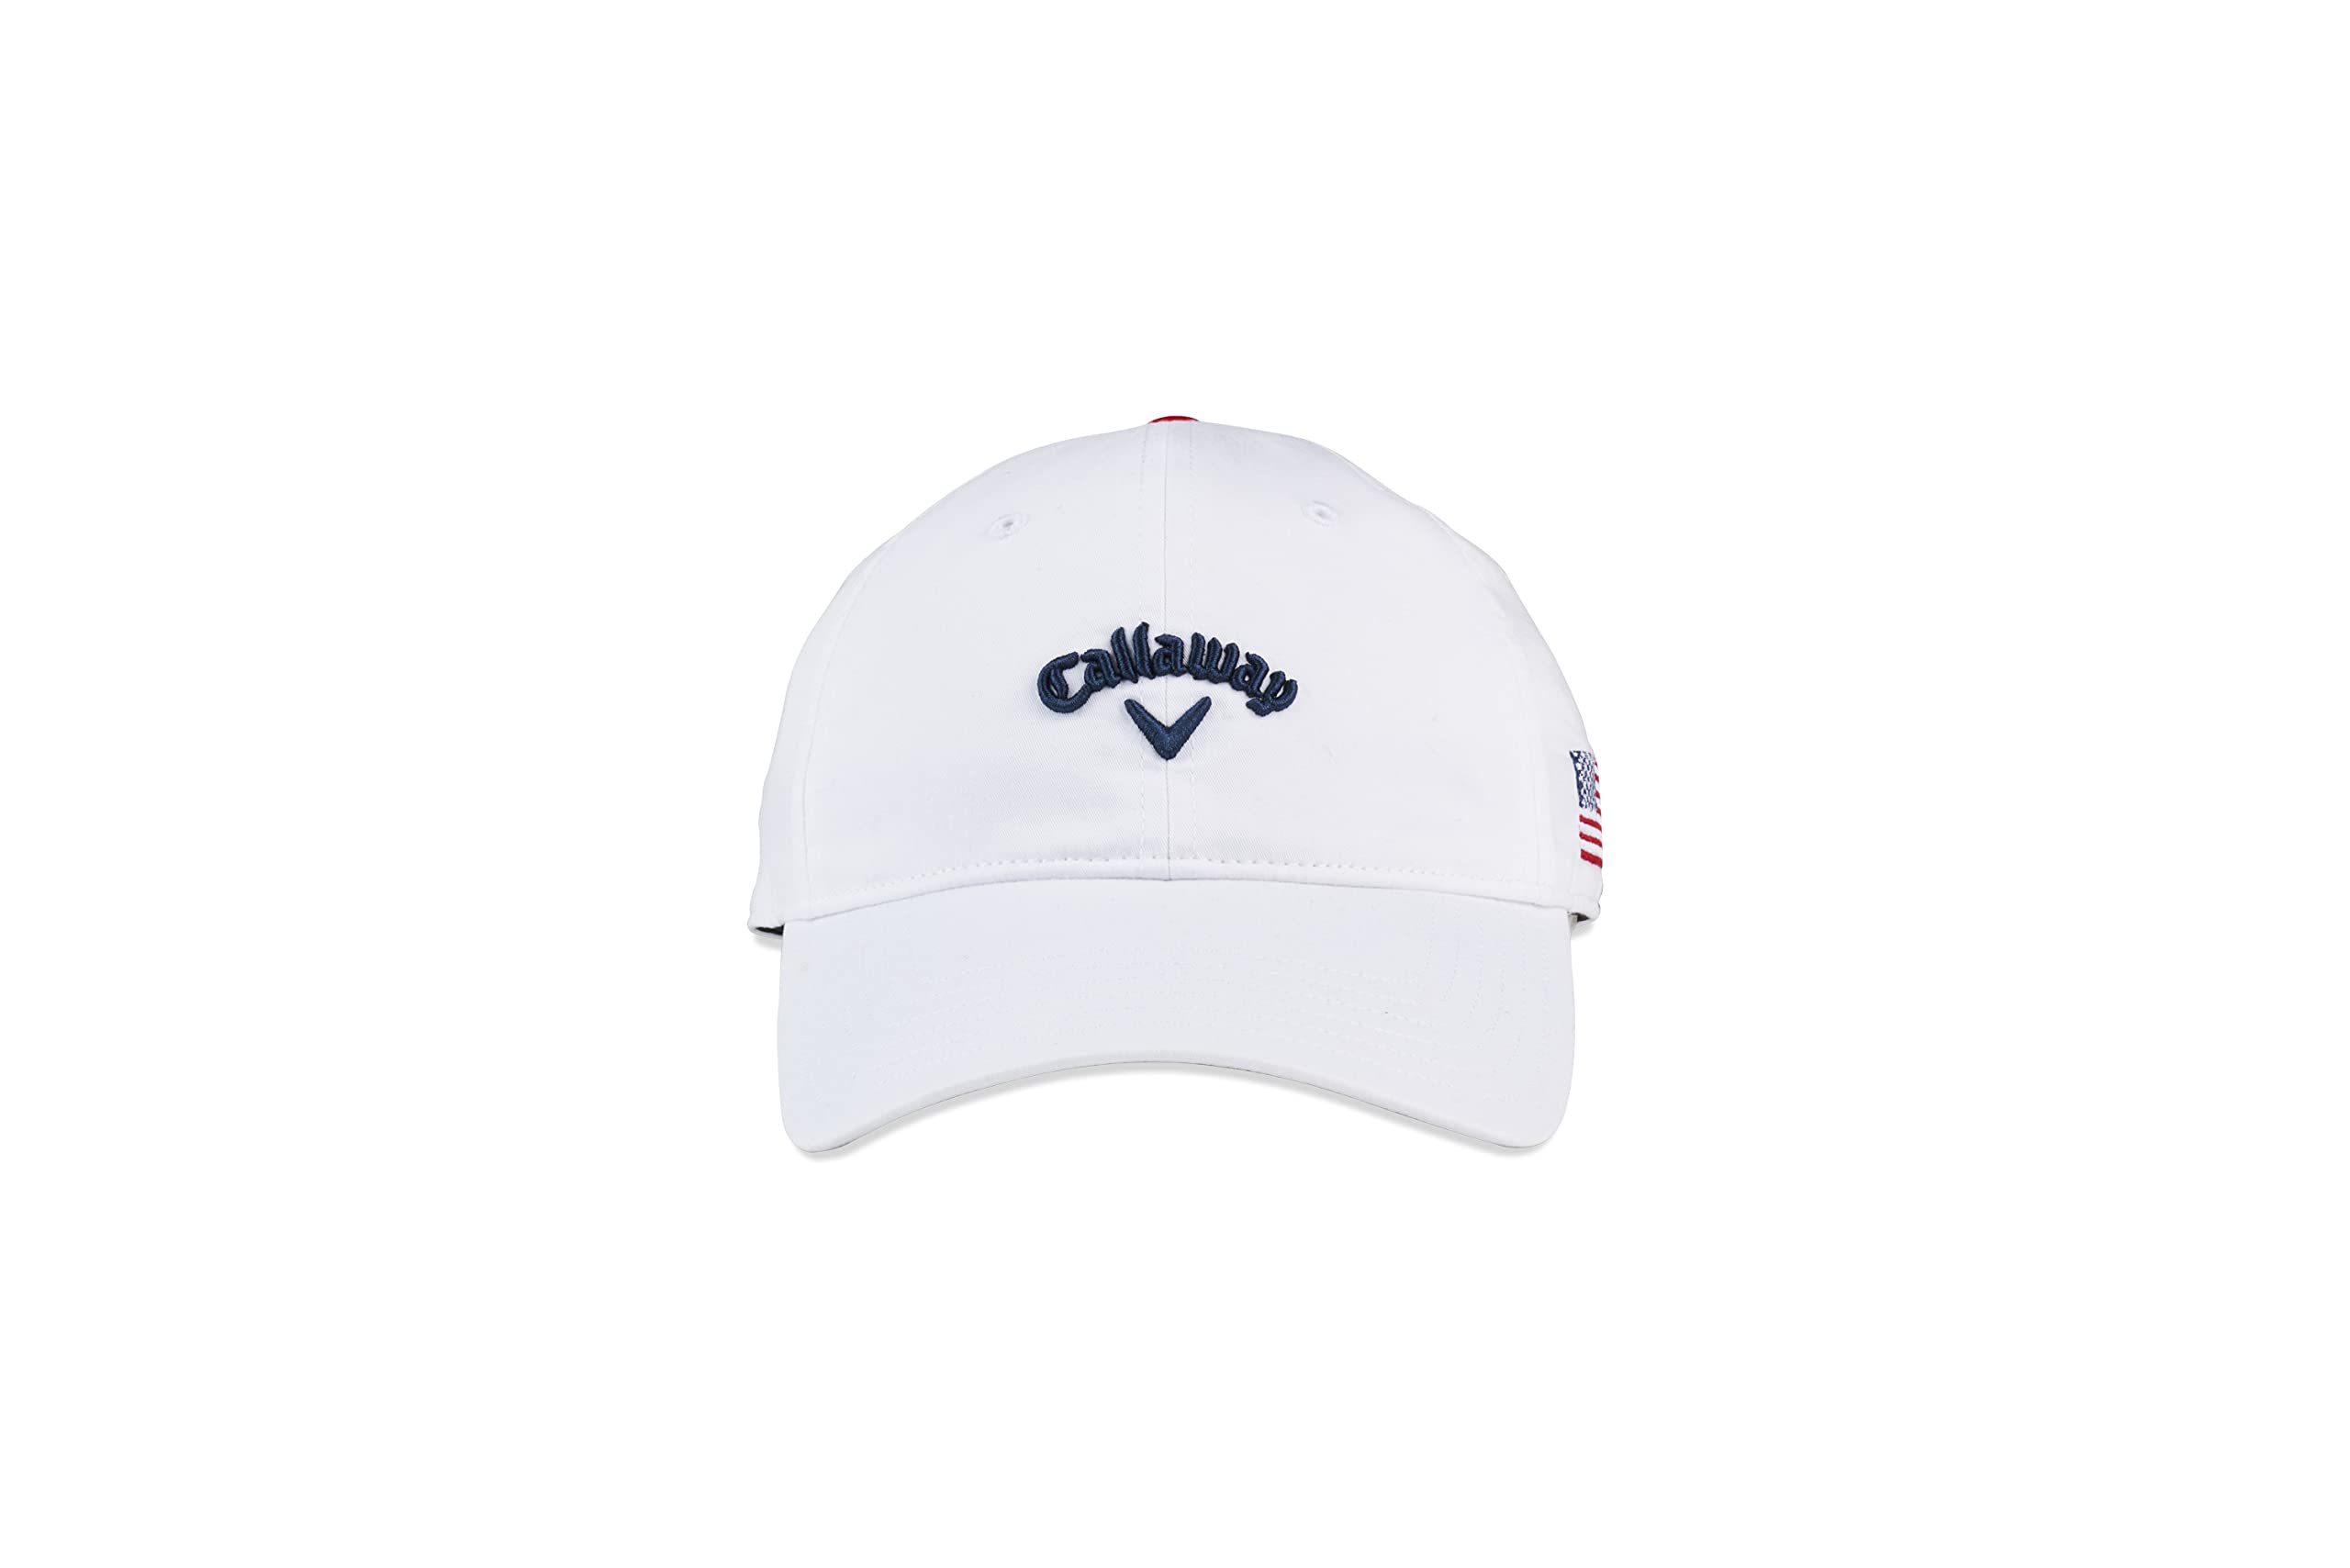 Callaway Golf Heritage Twill Hat